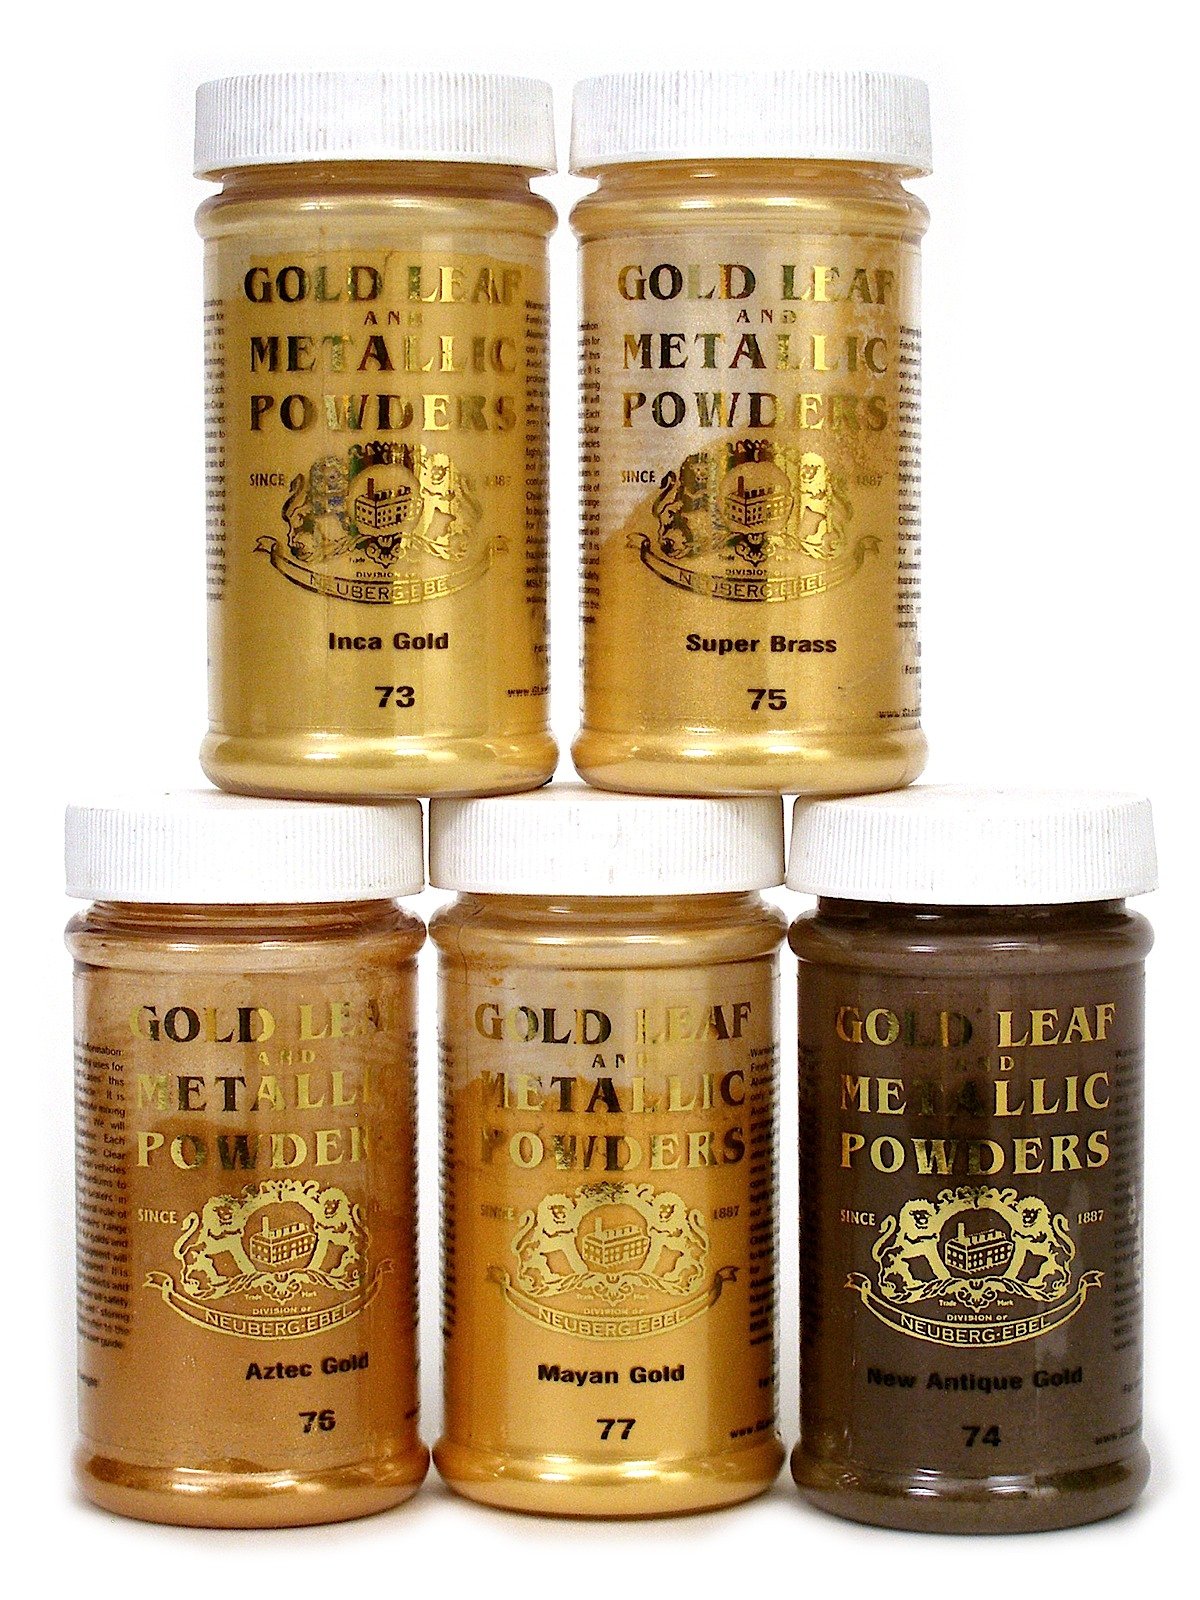 Shimmery Gold Mica Powder